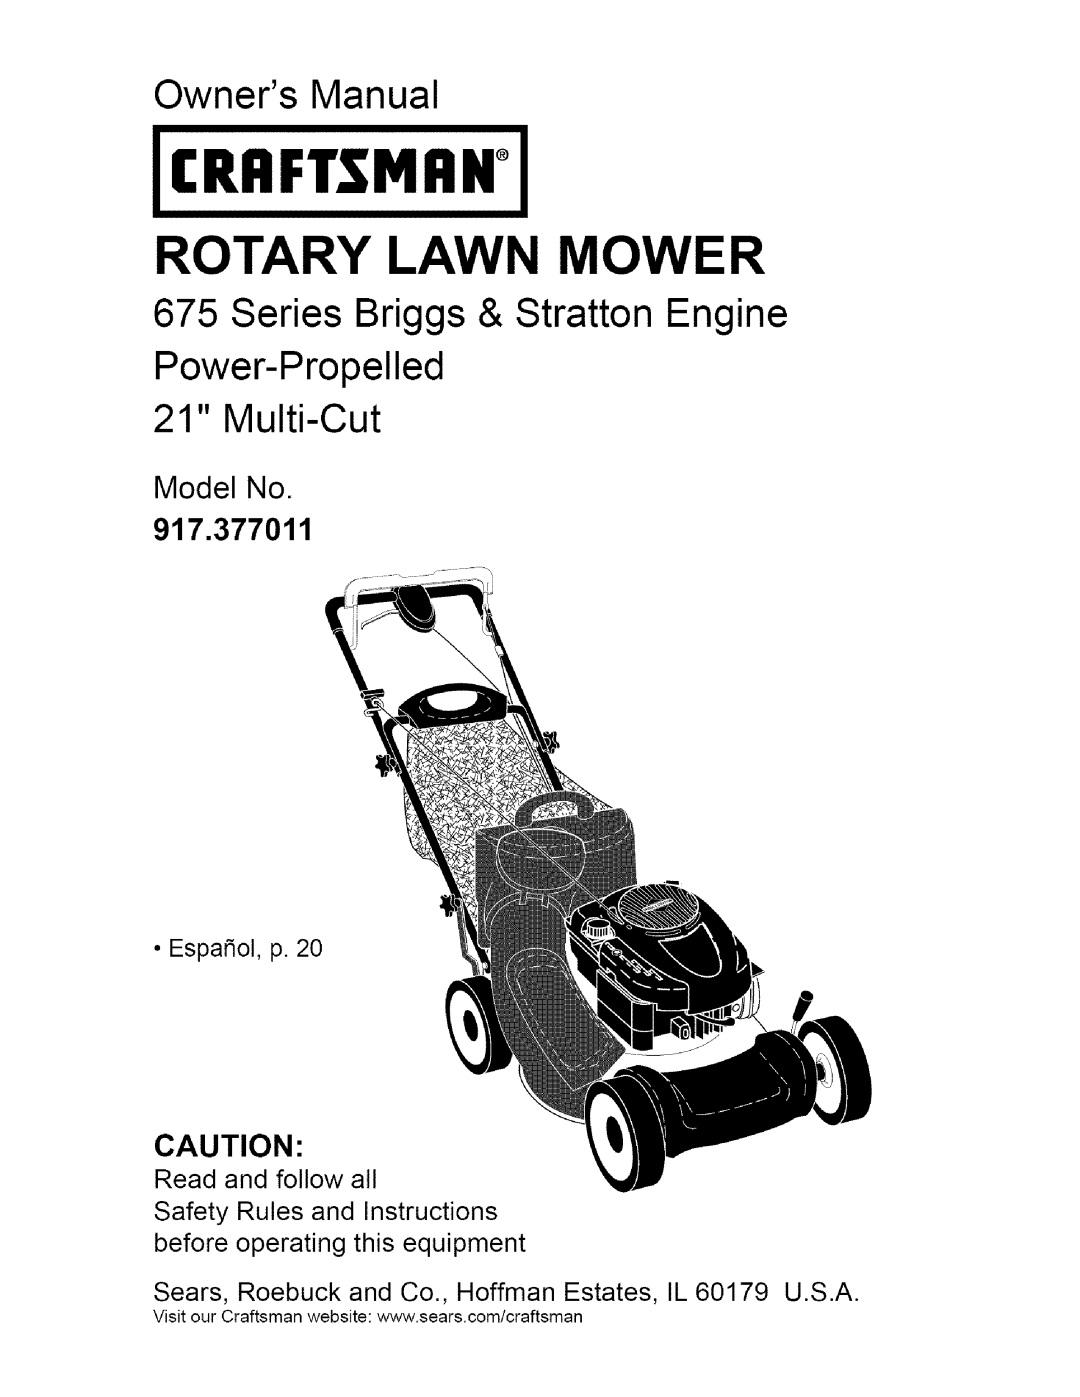 Craftsman 917.377011 owner manual Crrftsmiin, Rotary Lawn Mower, Series Briggs & Stratton Engine, Power-Propelled 